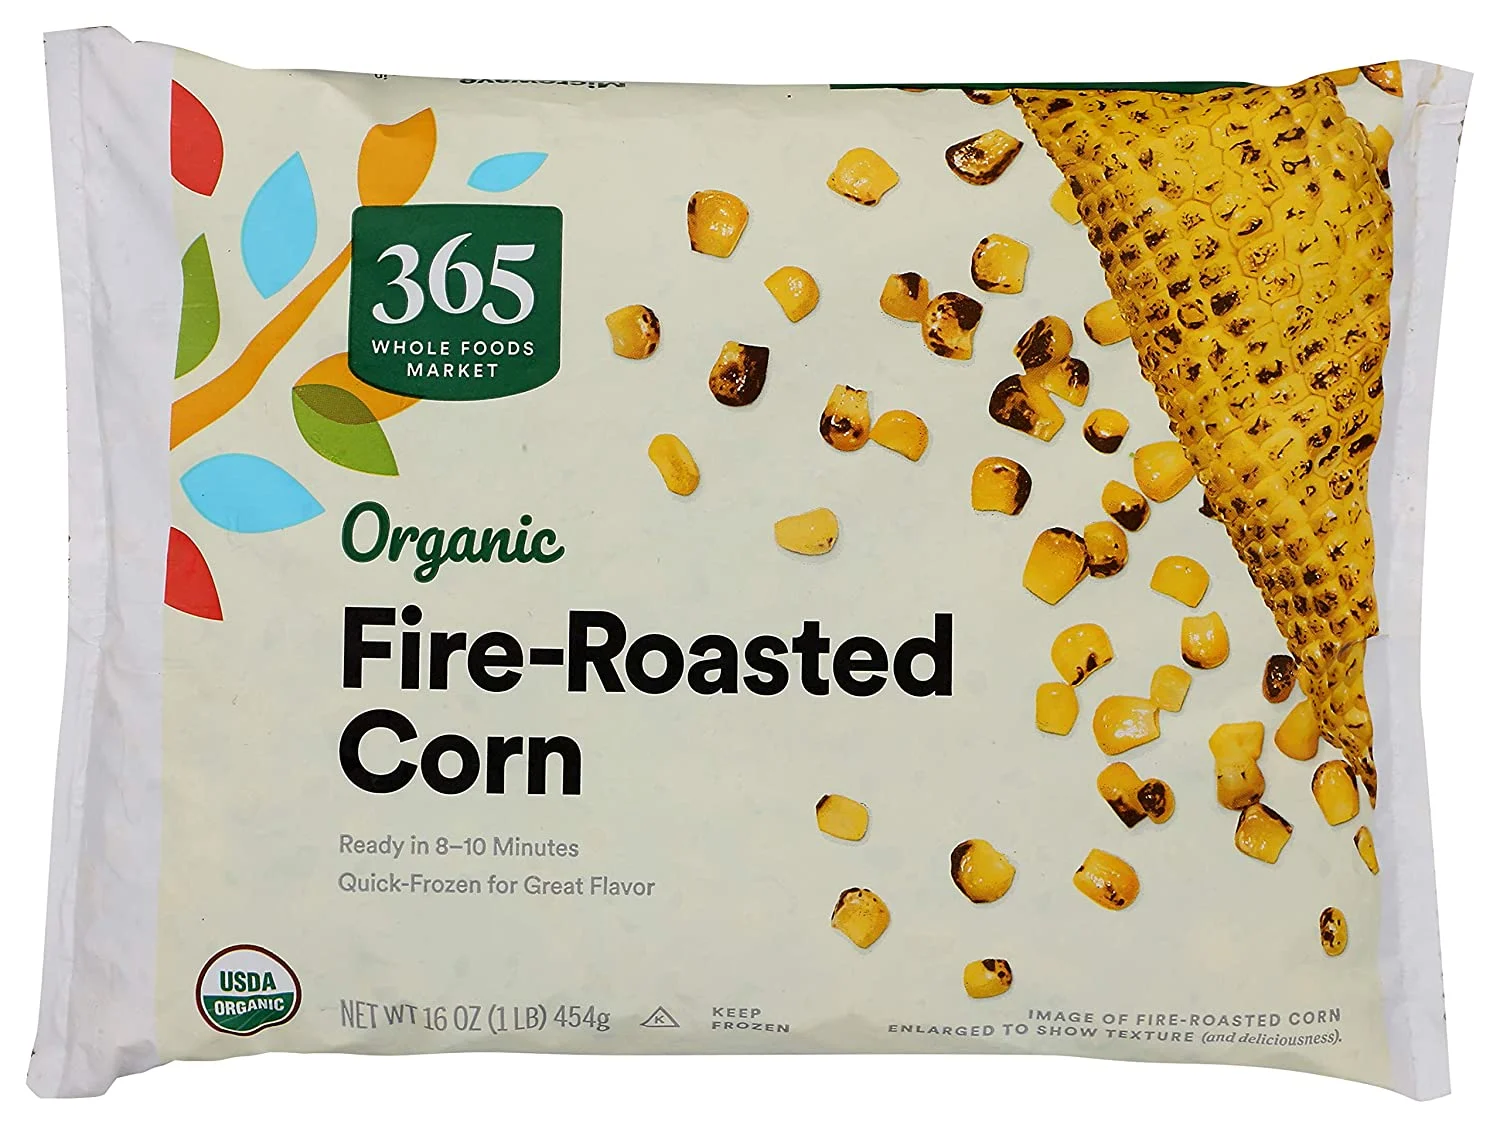 Fire-Roasted Corn